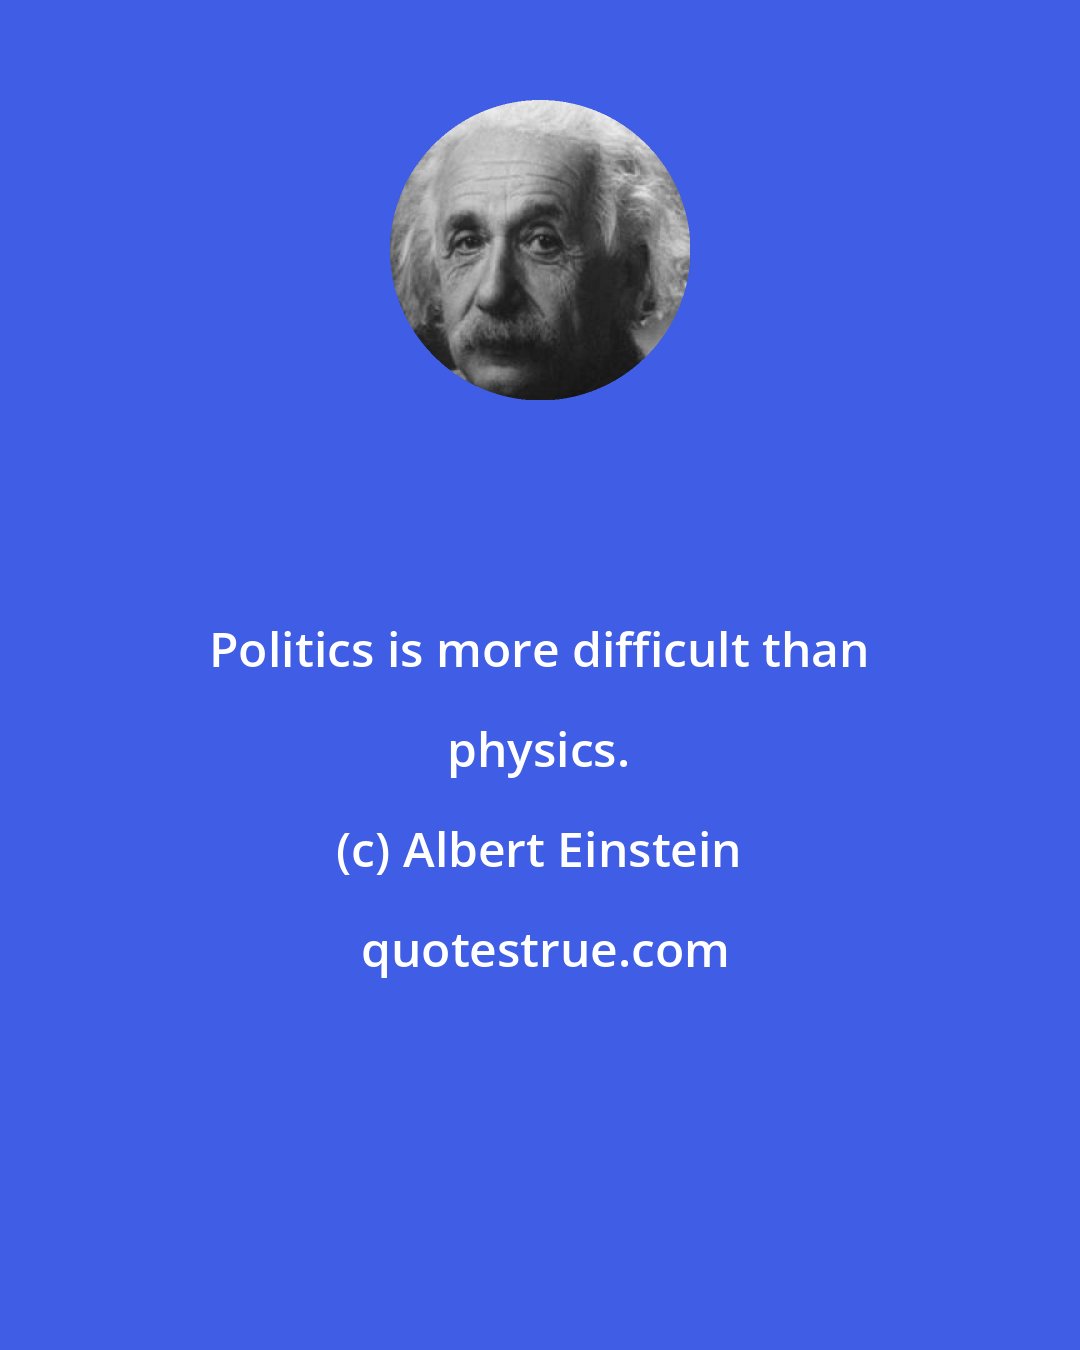 Albert Einstein: Politics is more difficult than physics.